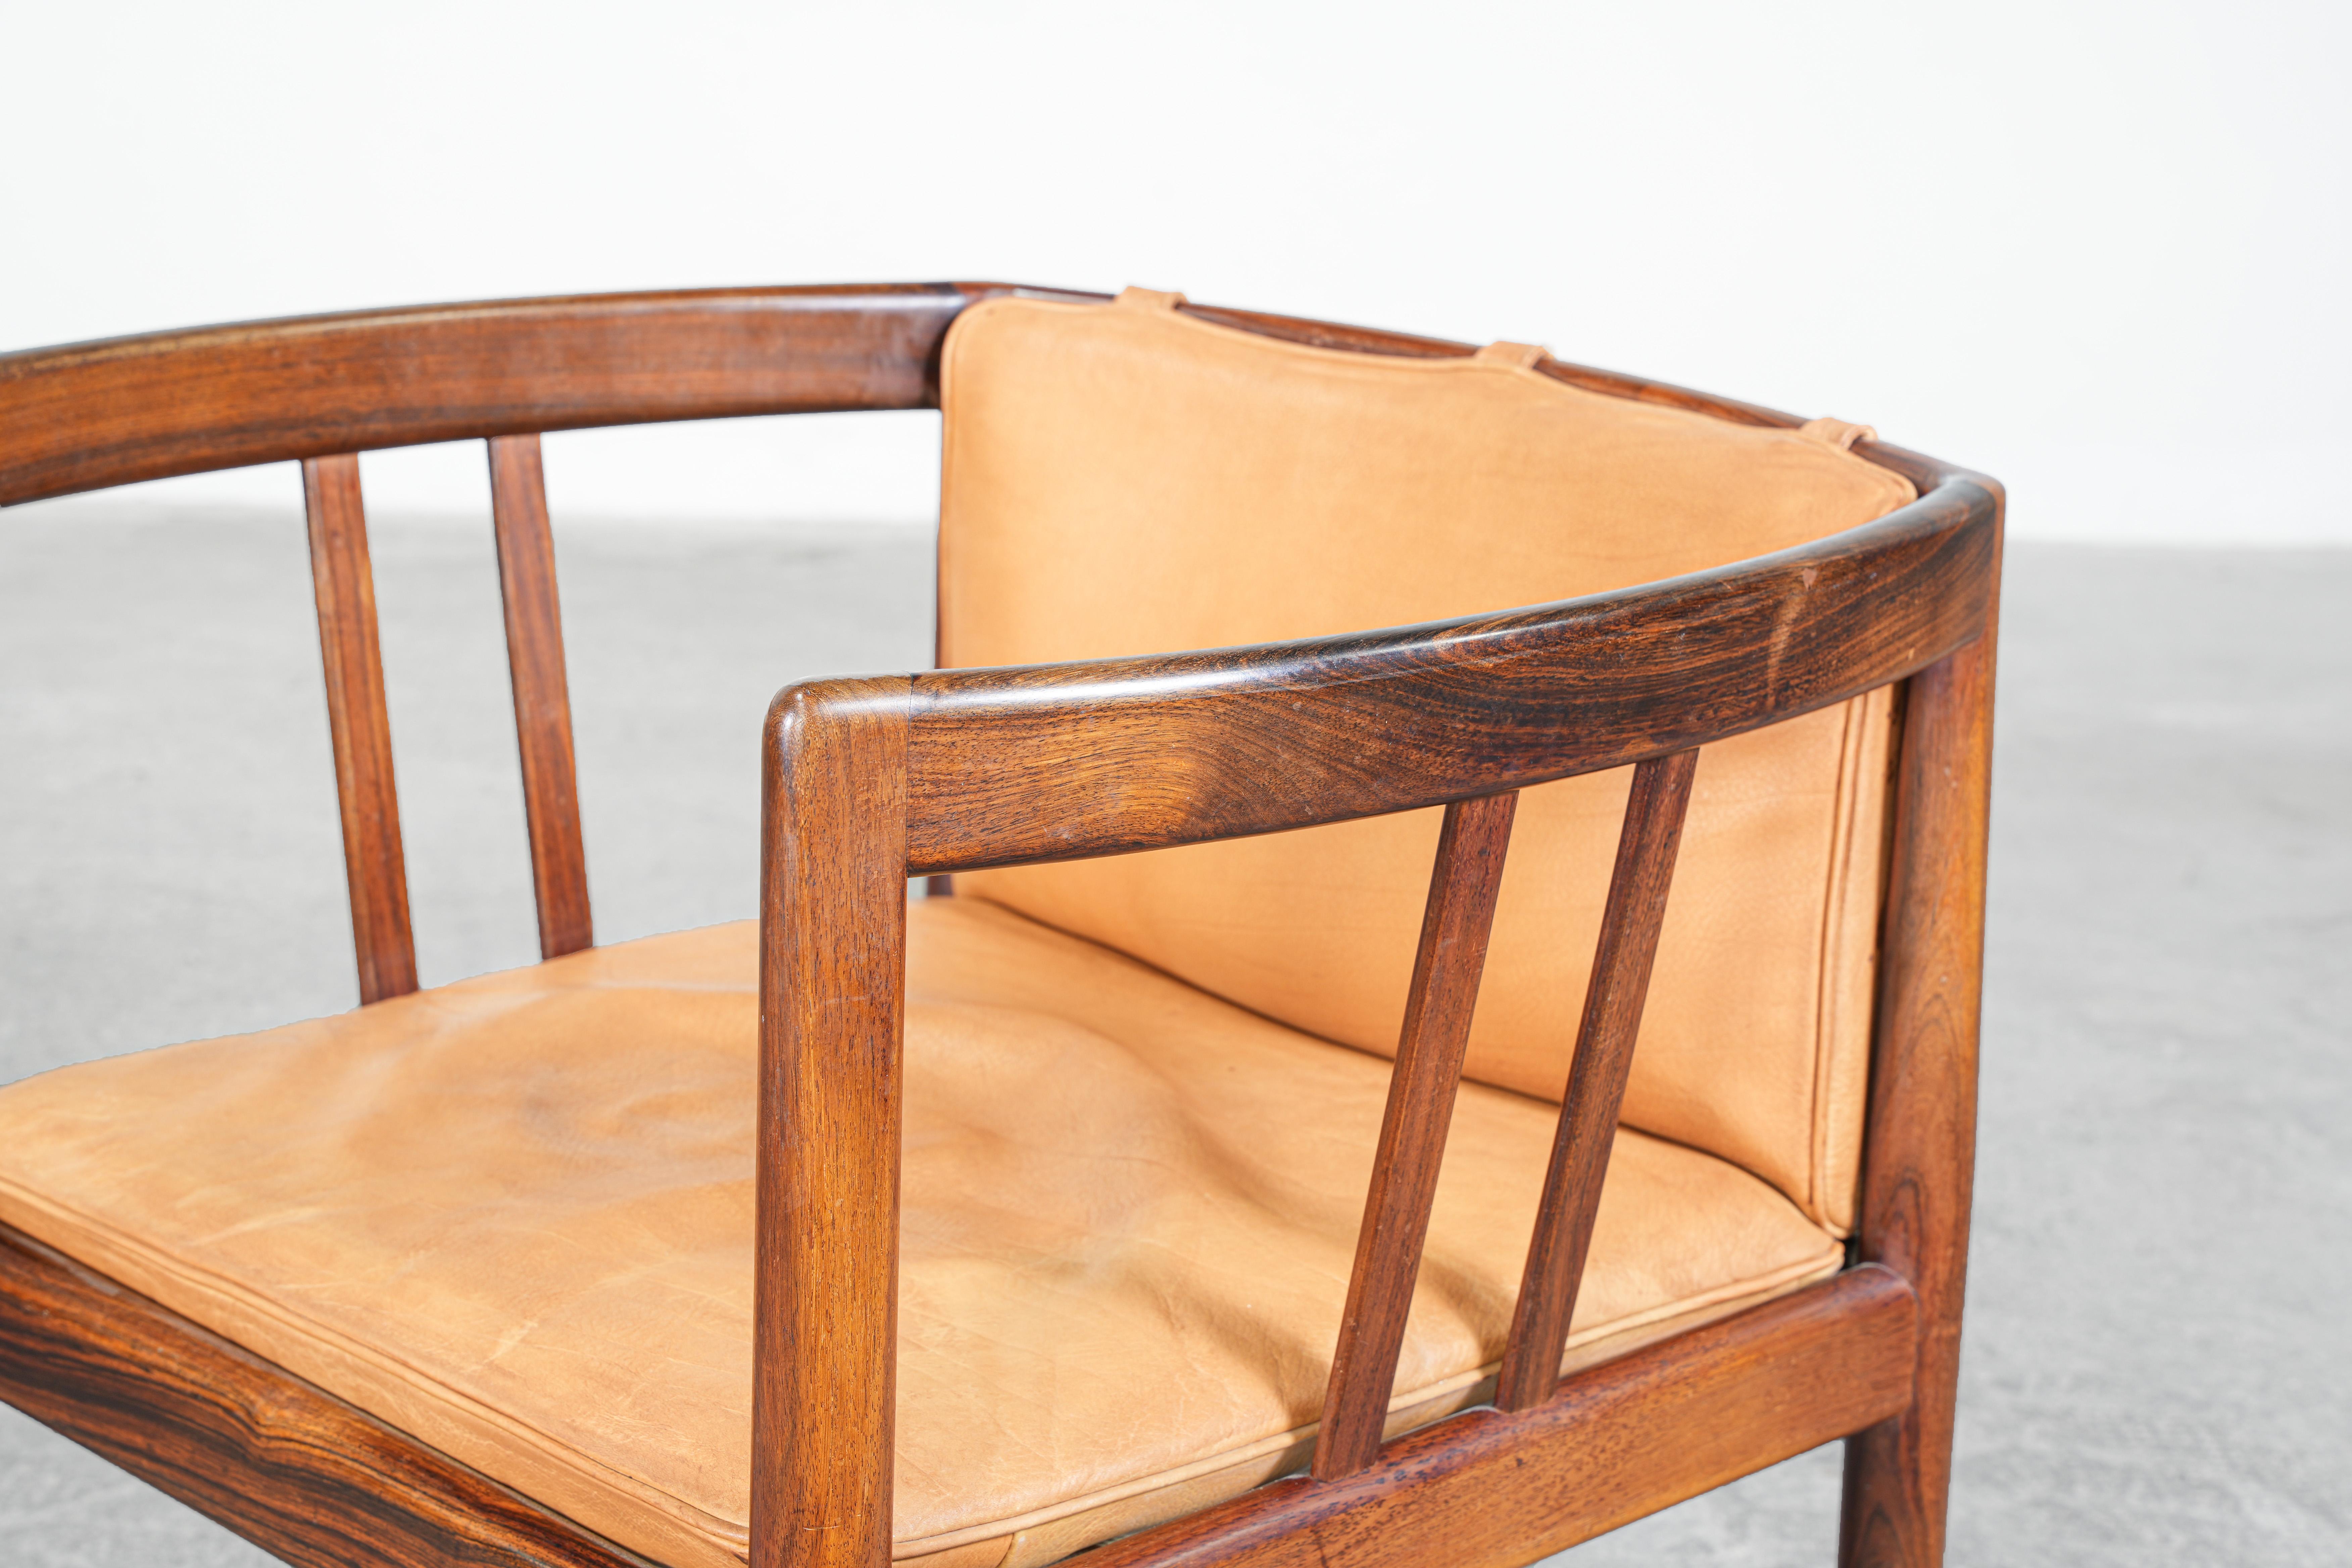 Pair of Danish Lounge Chairs by Illum Wikkelsø for Holger Christiansen, 1962 For Sale 2